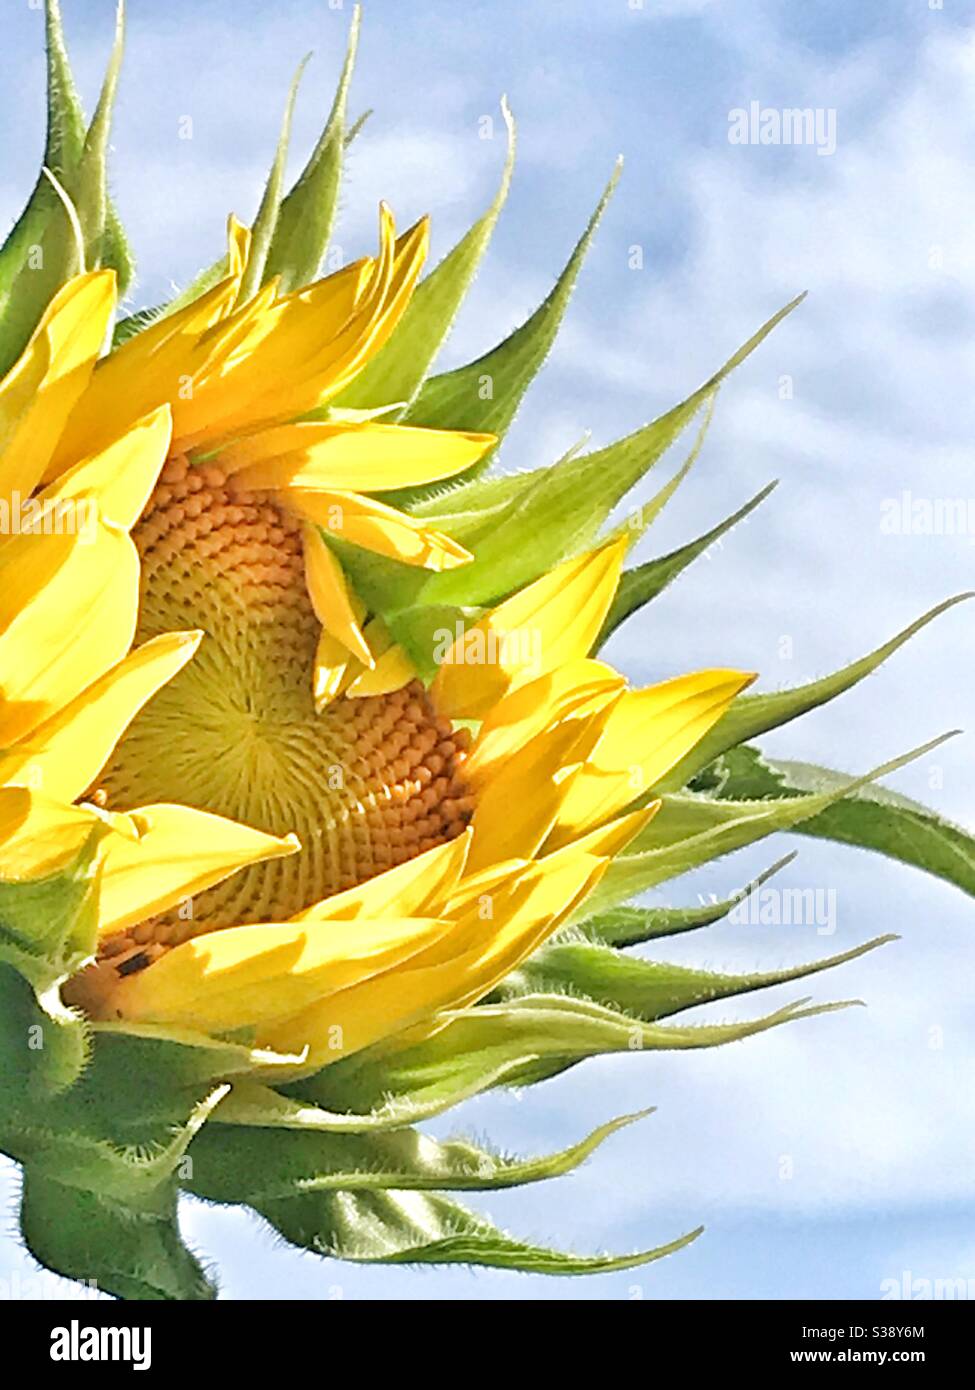 Sunflower blooming in bright sunlight Stock Photo